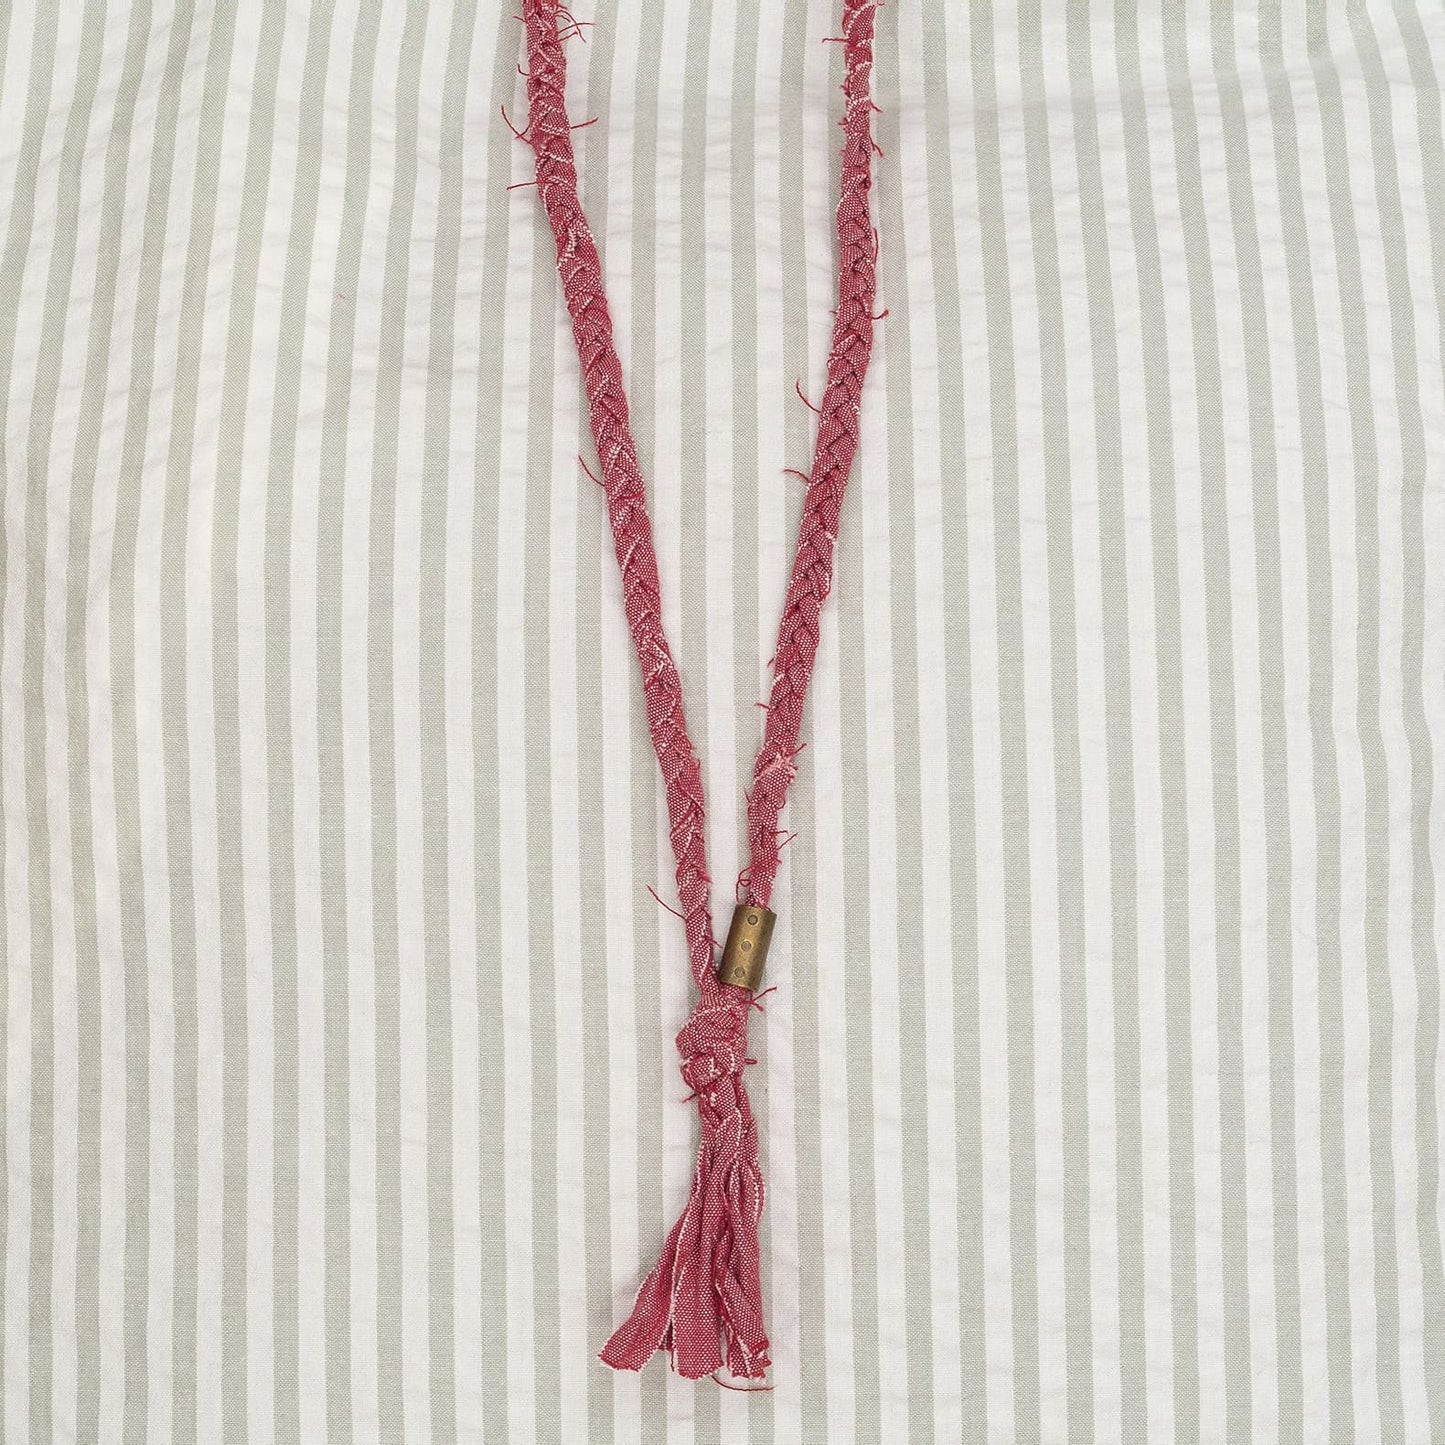 Borali - Irruo braided necklace BC-GR1002